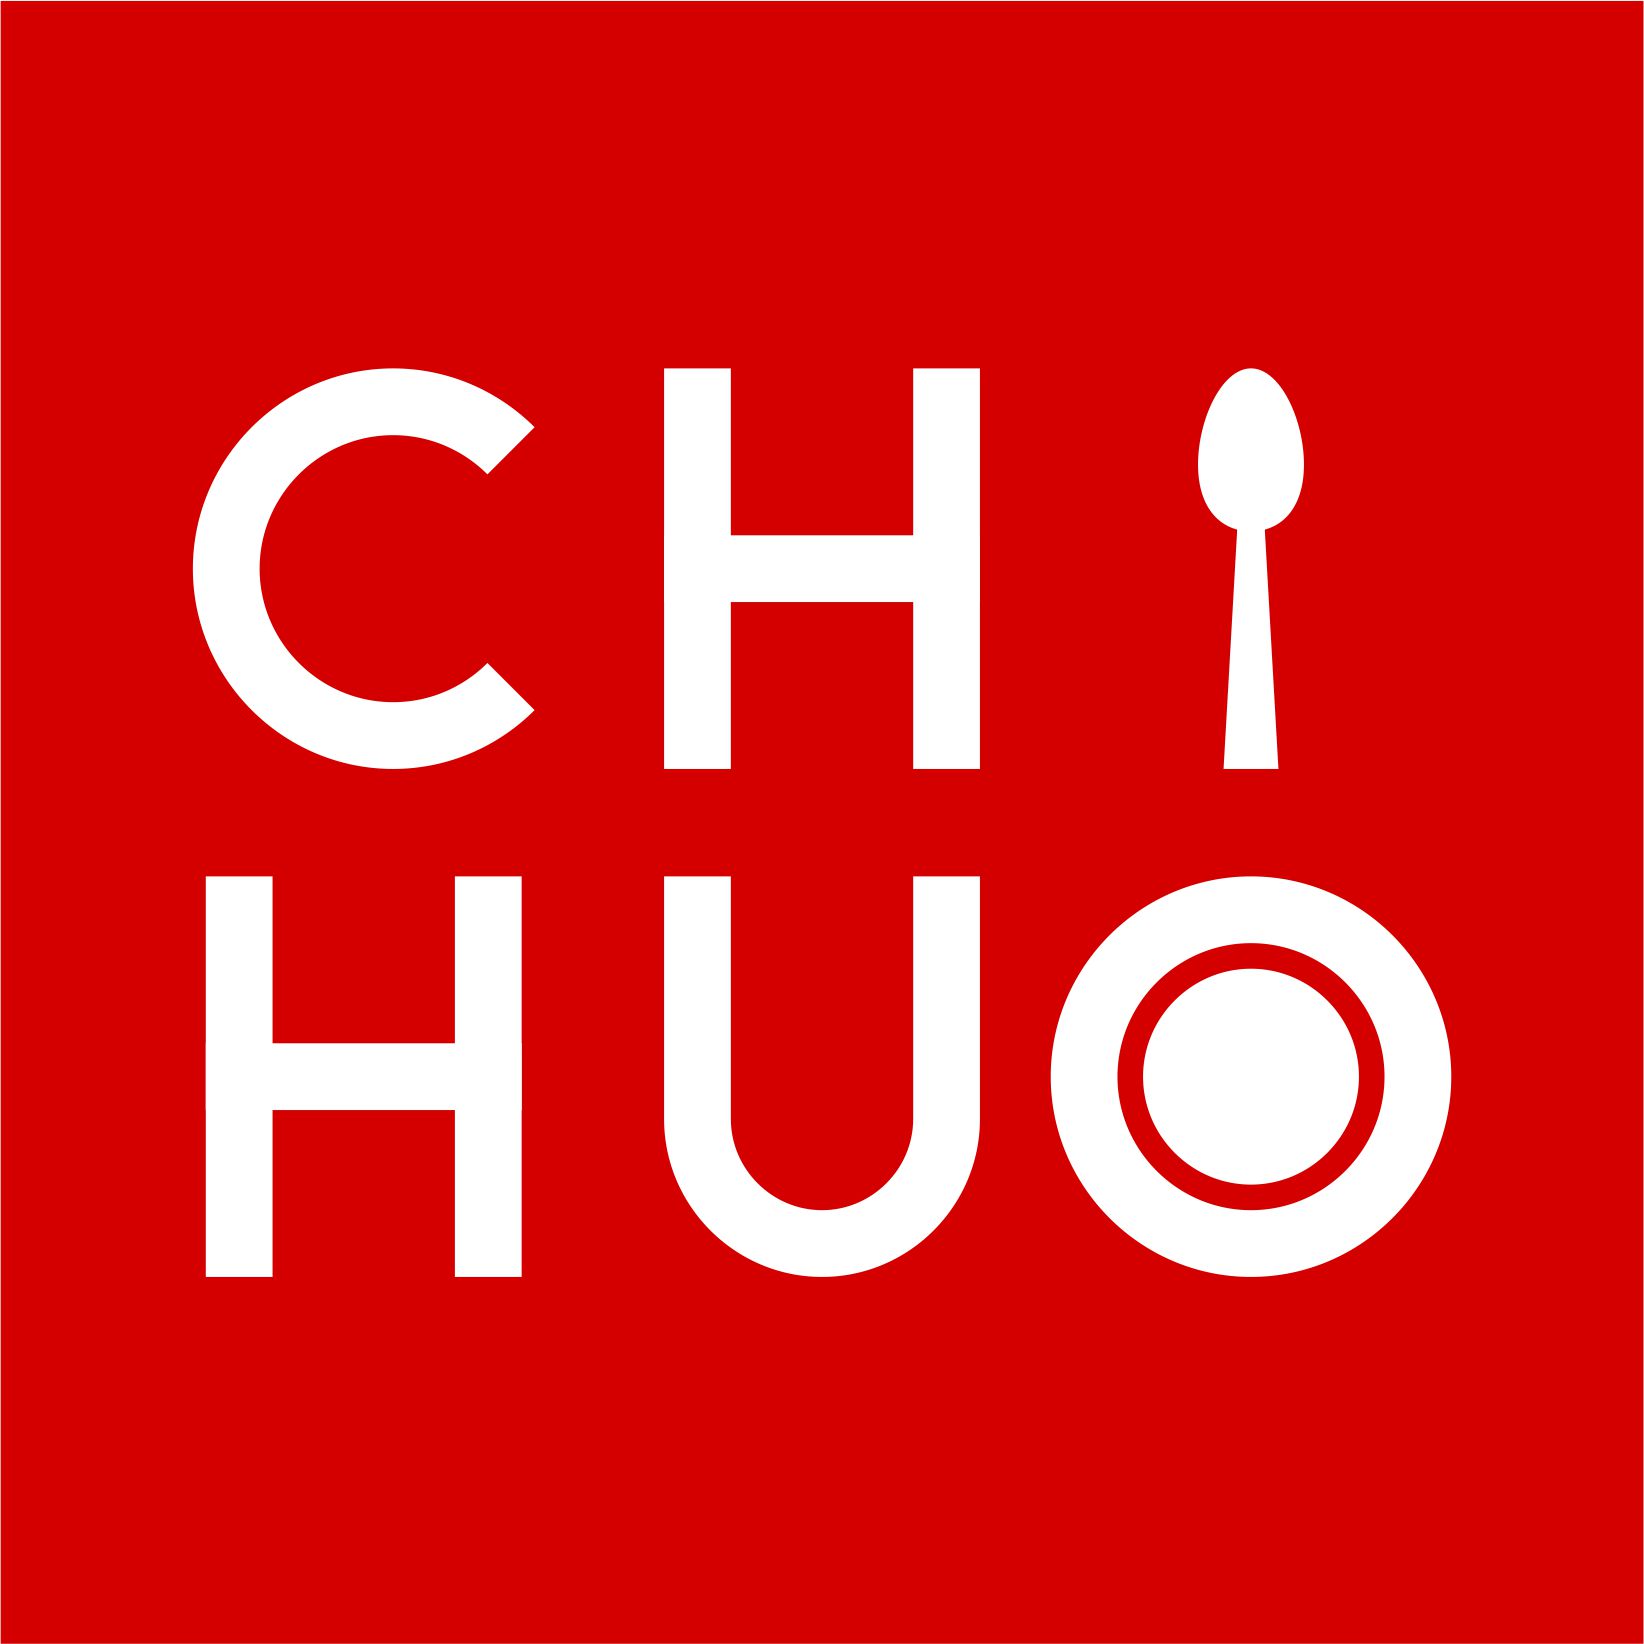 Chihuo Inc